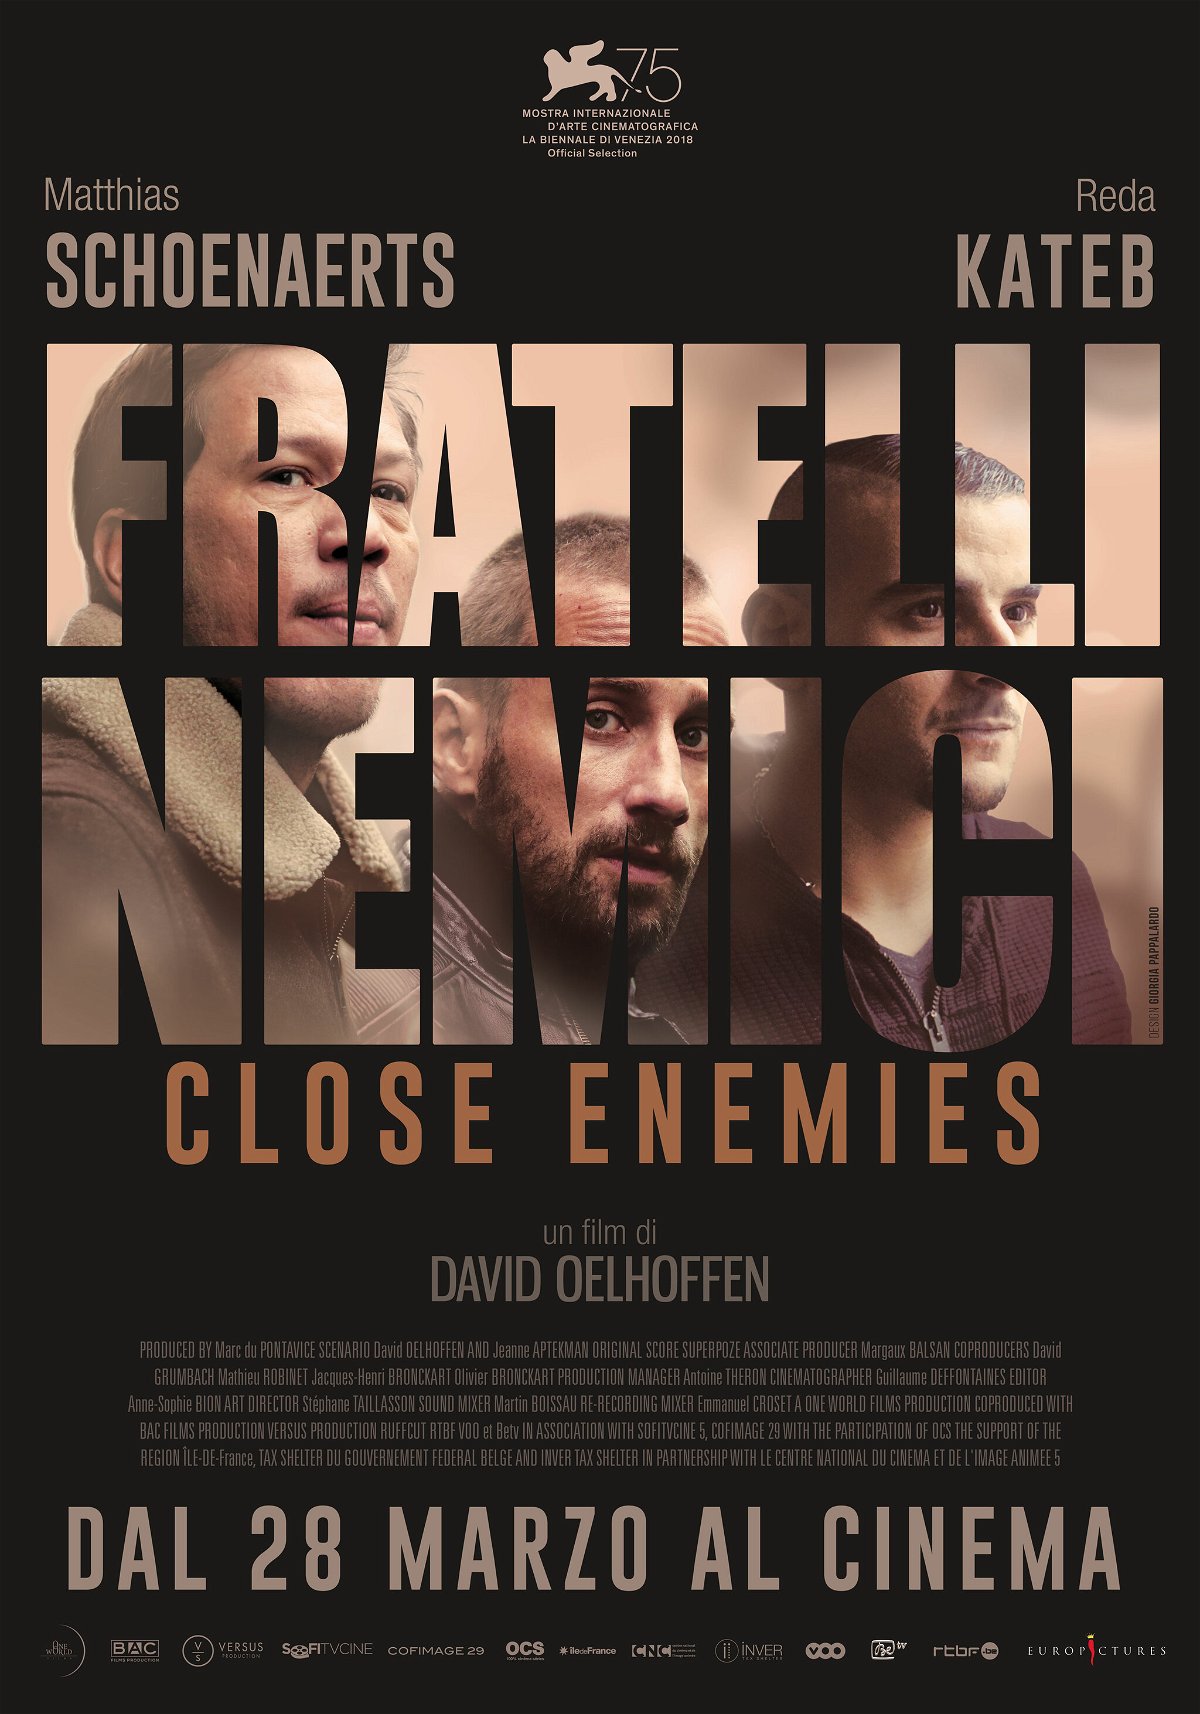 Il poster d Fratelli nemici, film con protagonista Matthias Schoenaerts